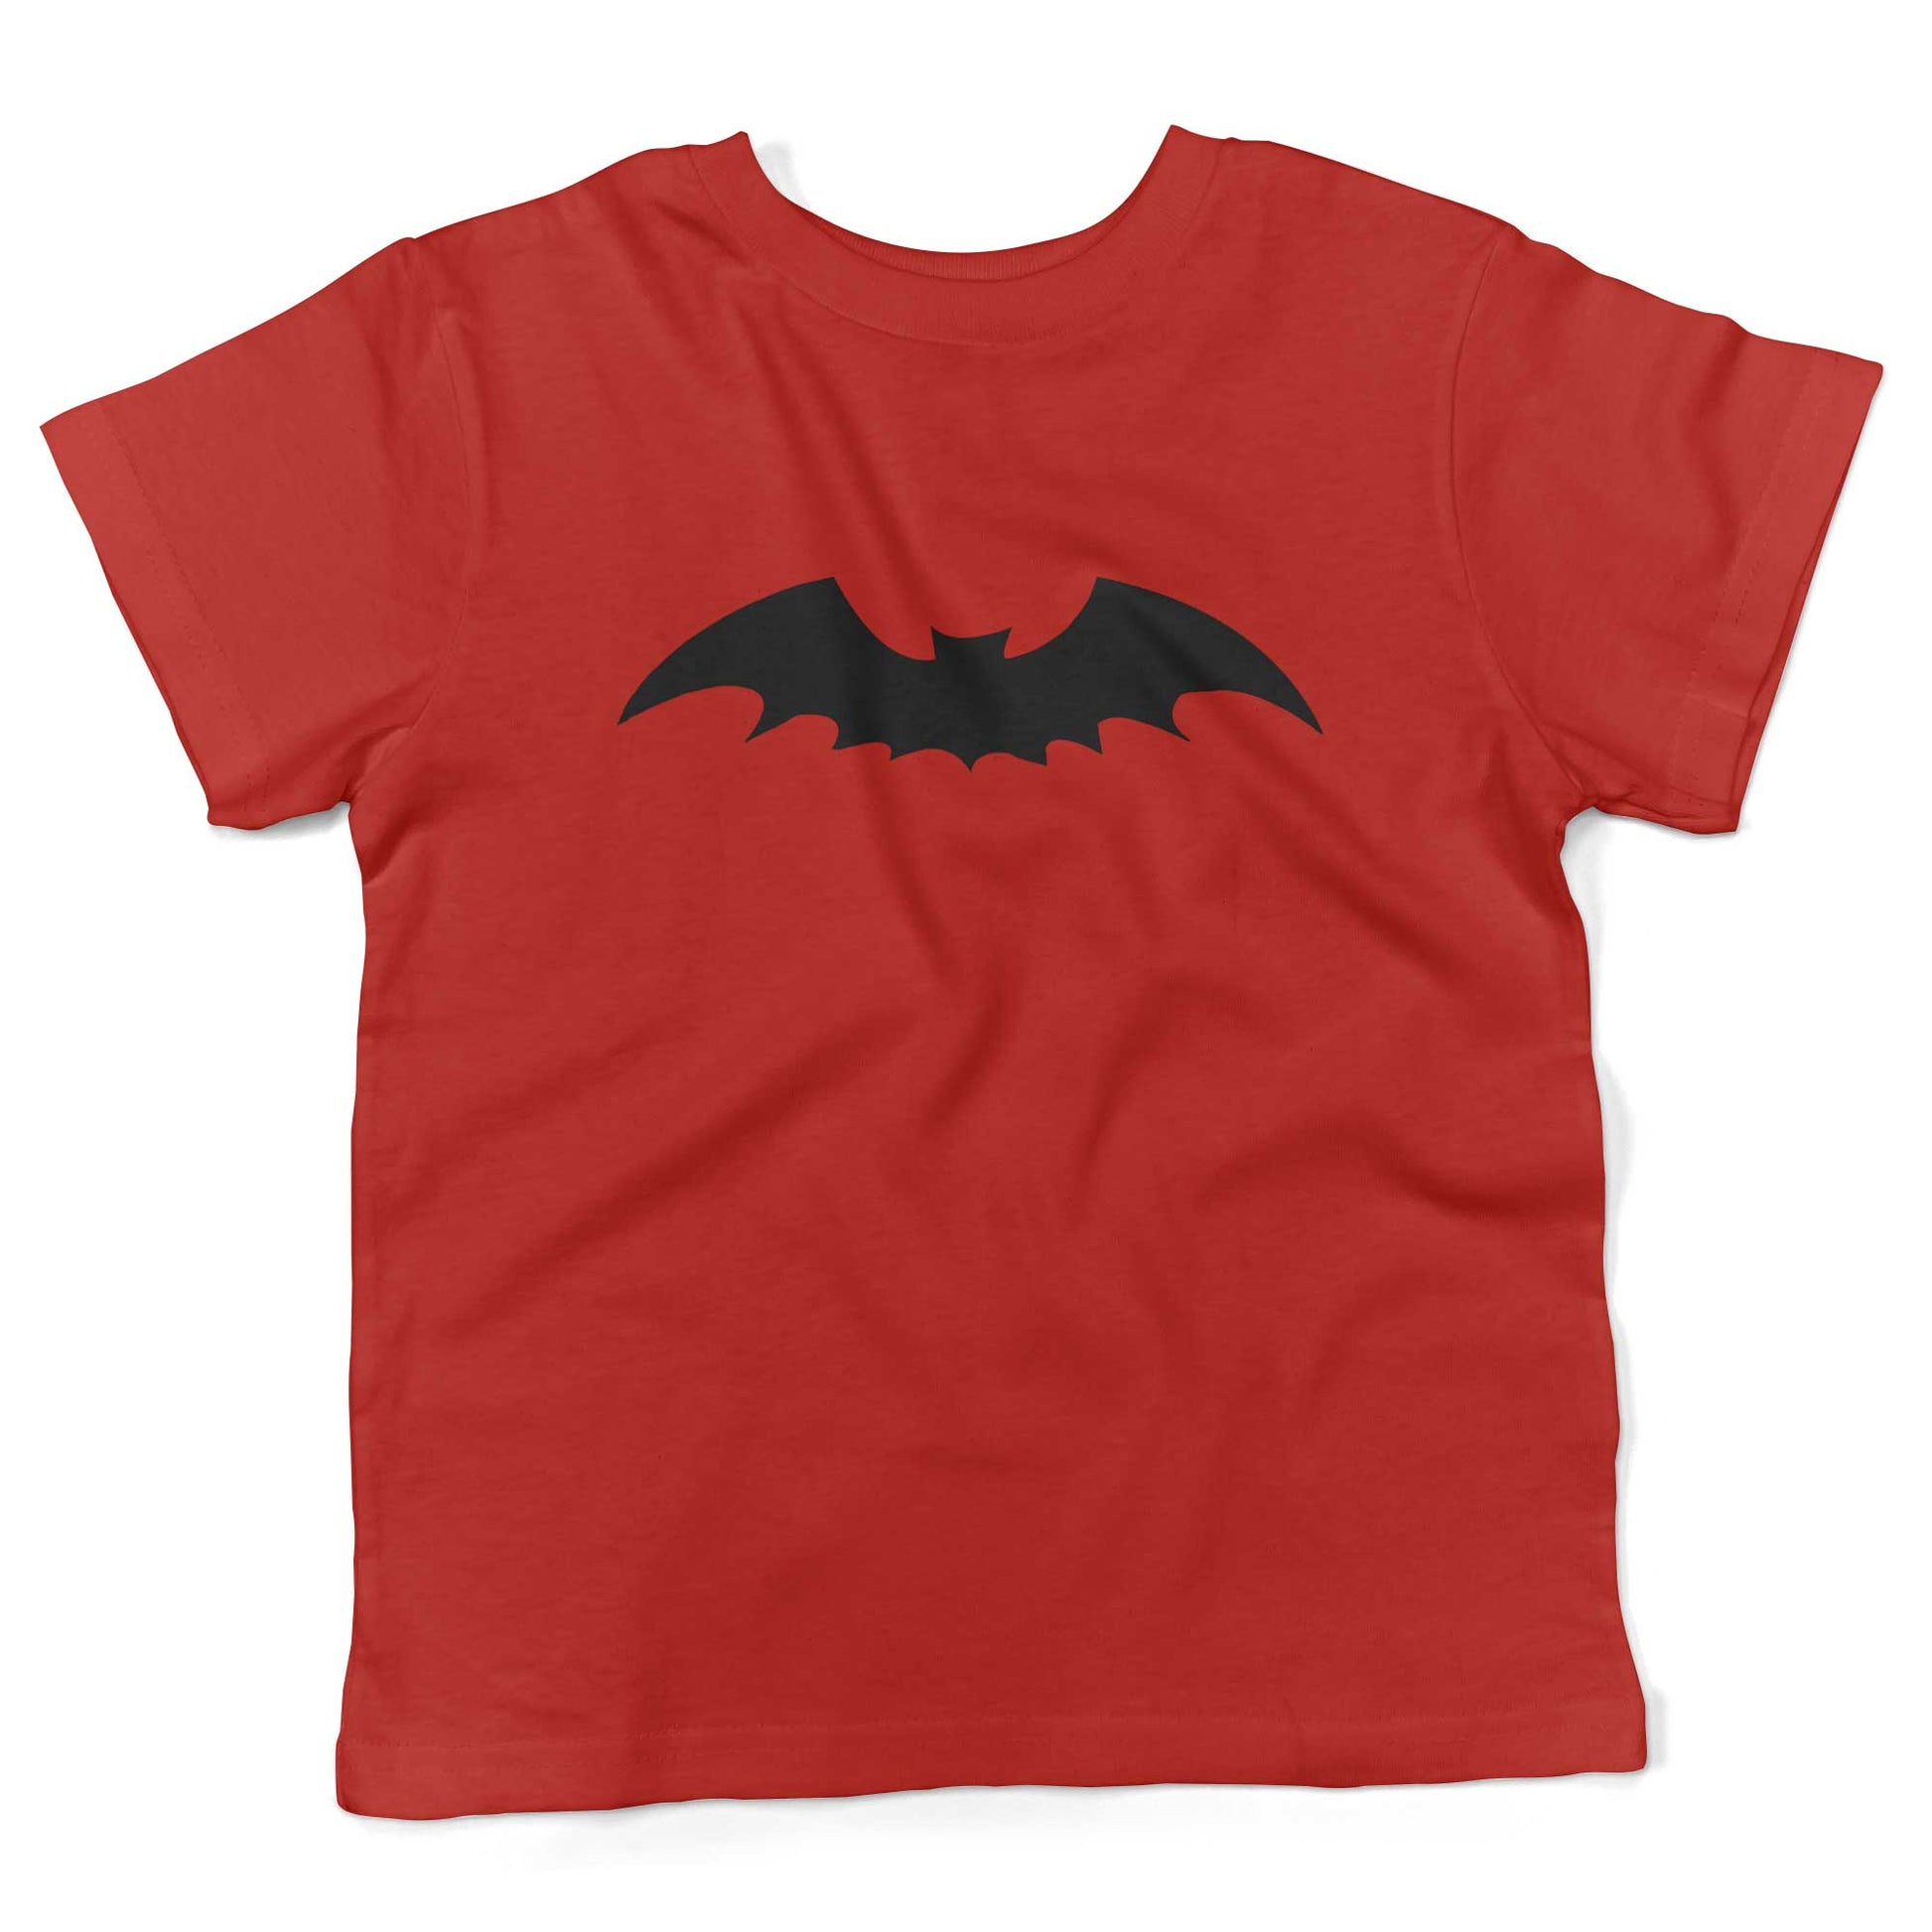 Gothic Bat Toddler Shirt-Red-2T